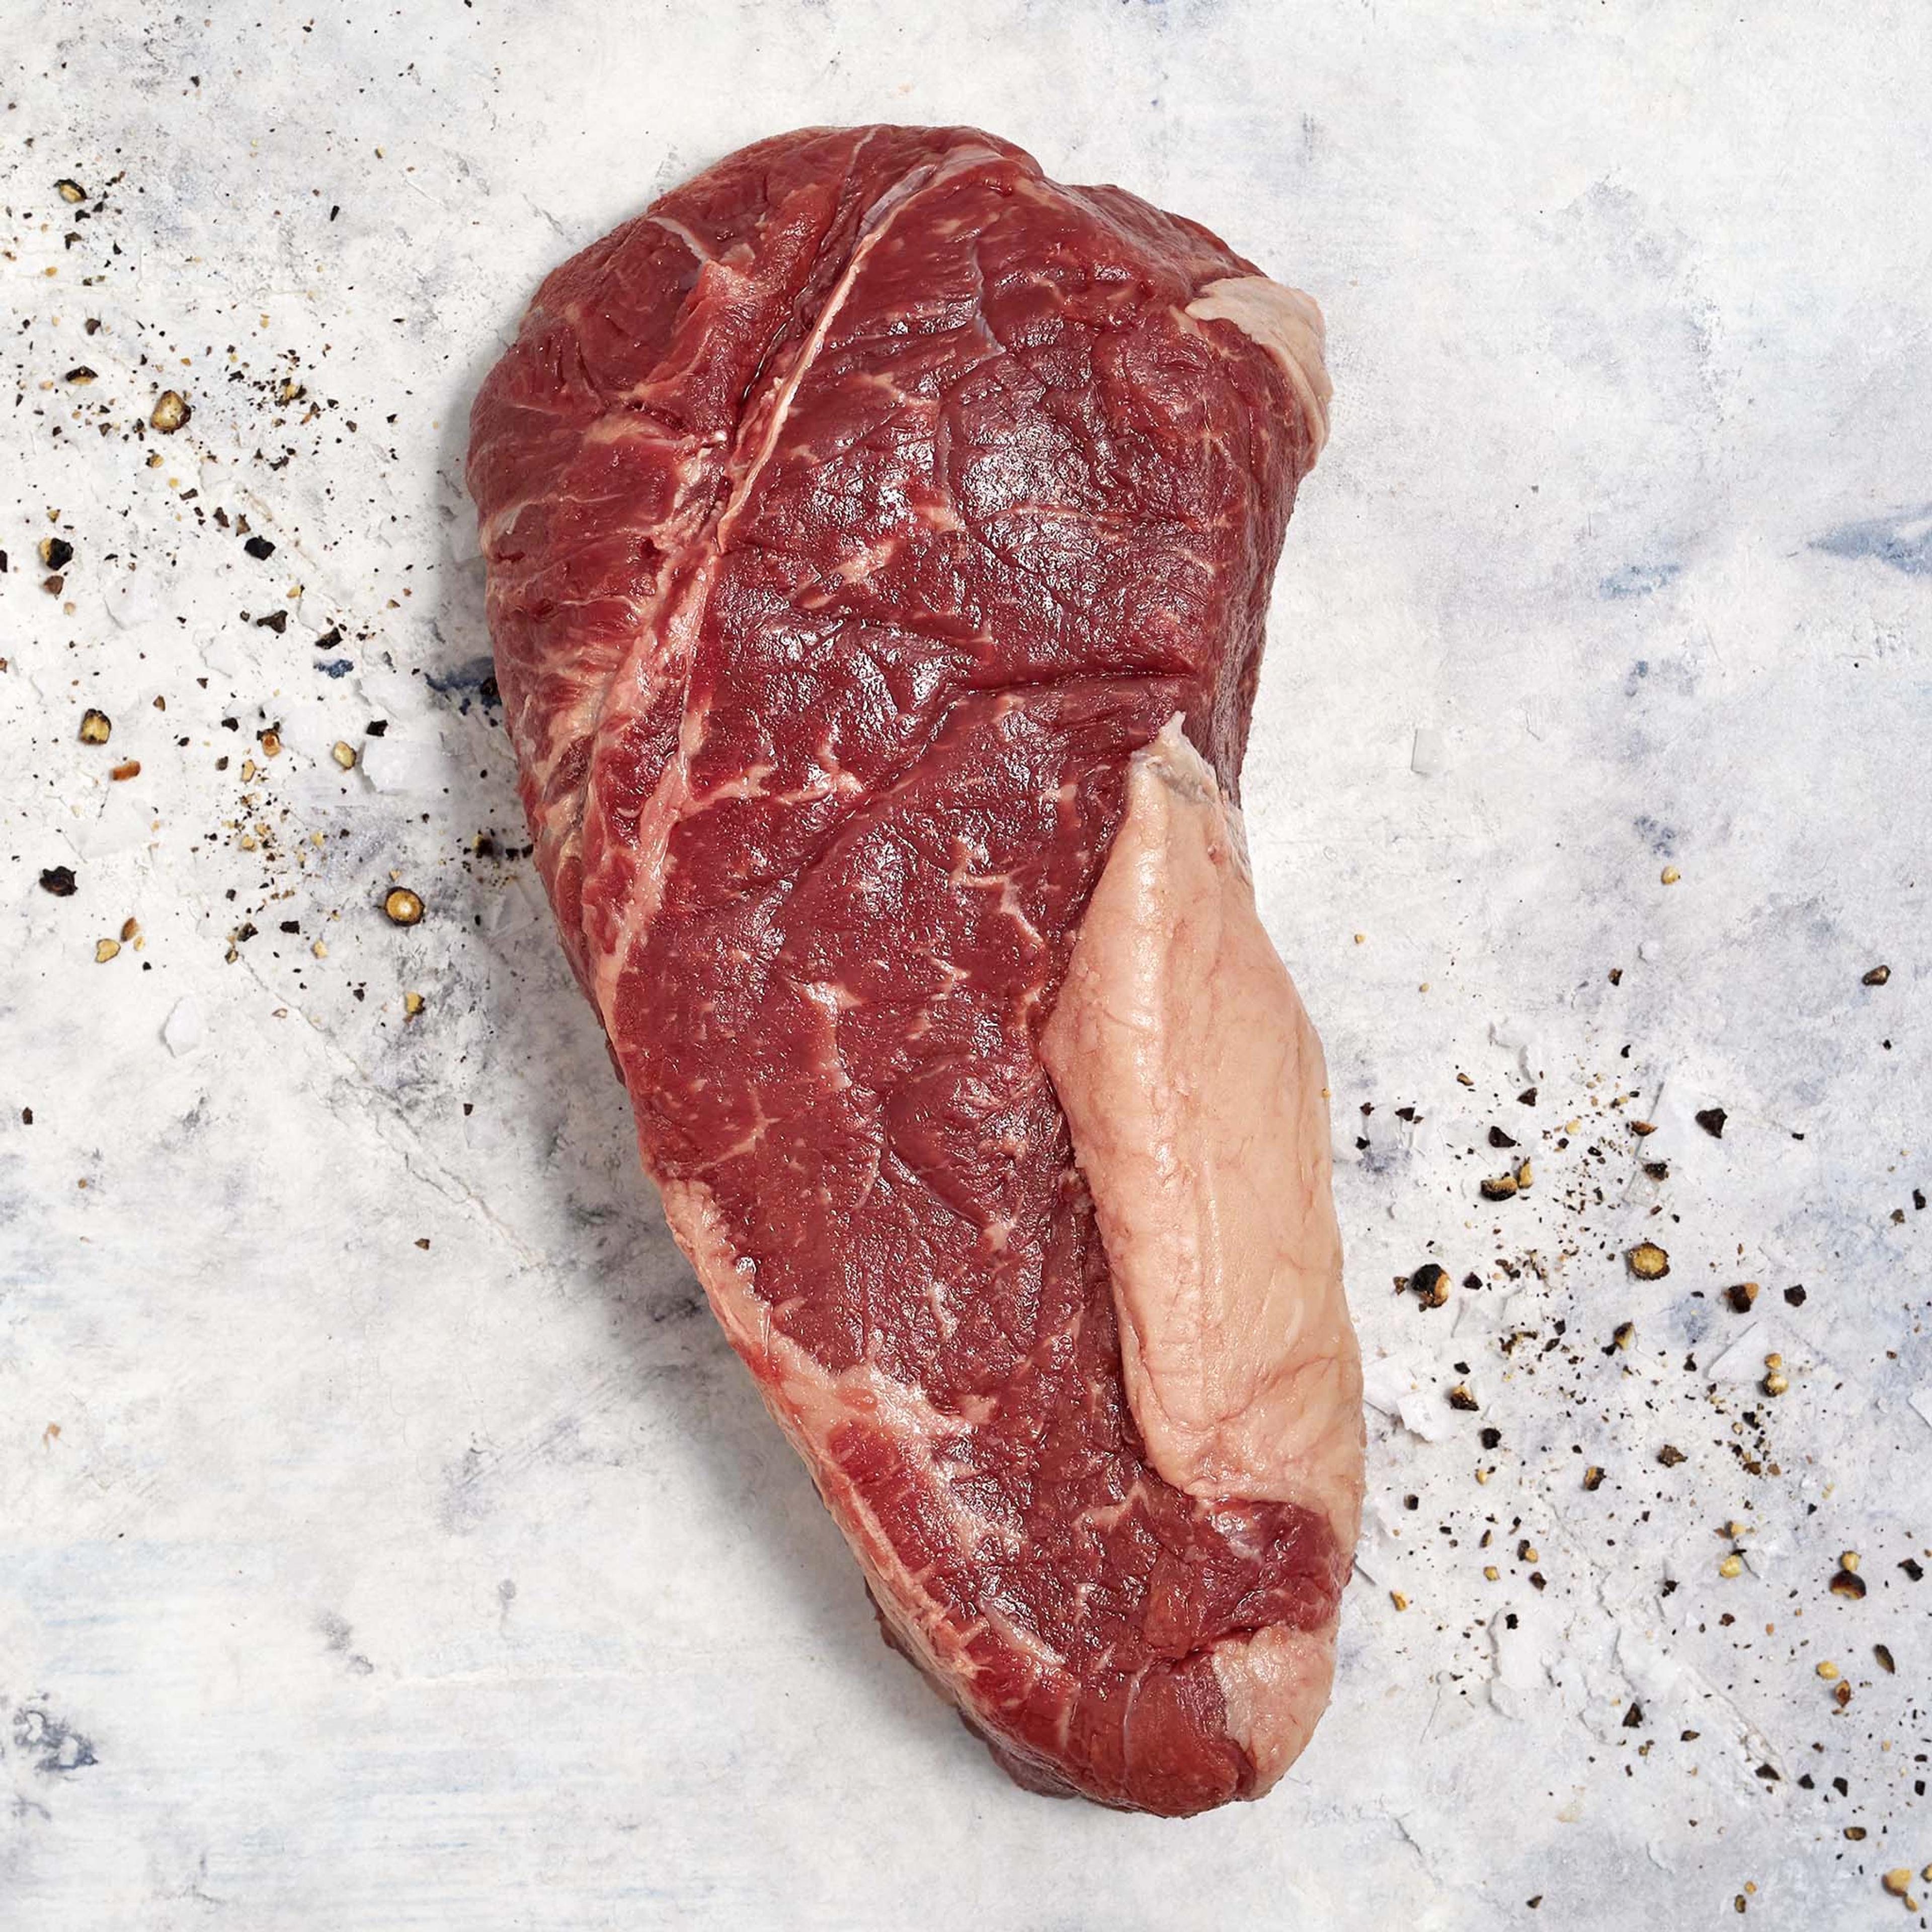 Bison NY Strip Steak - 0.5